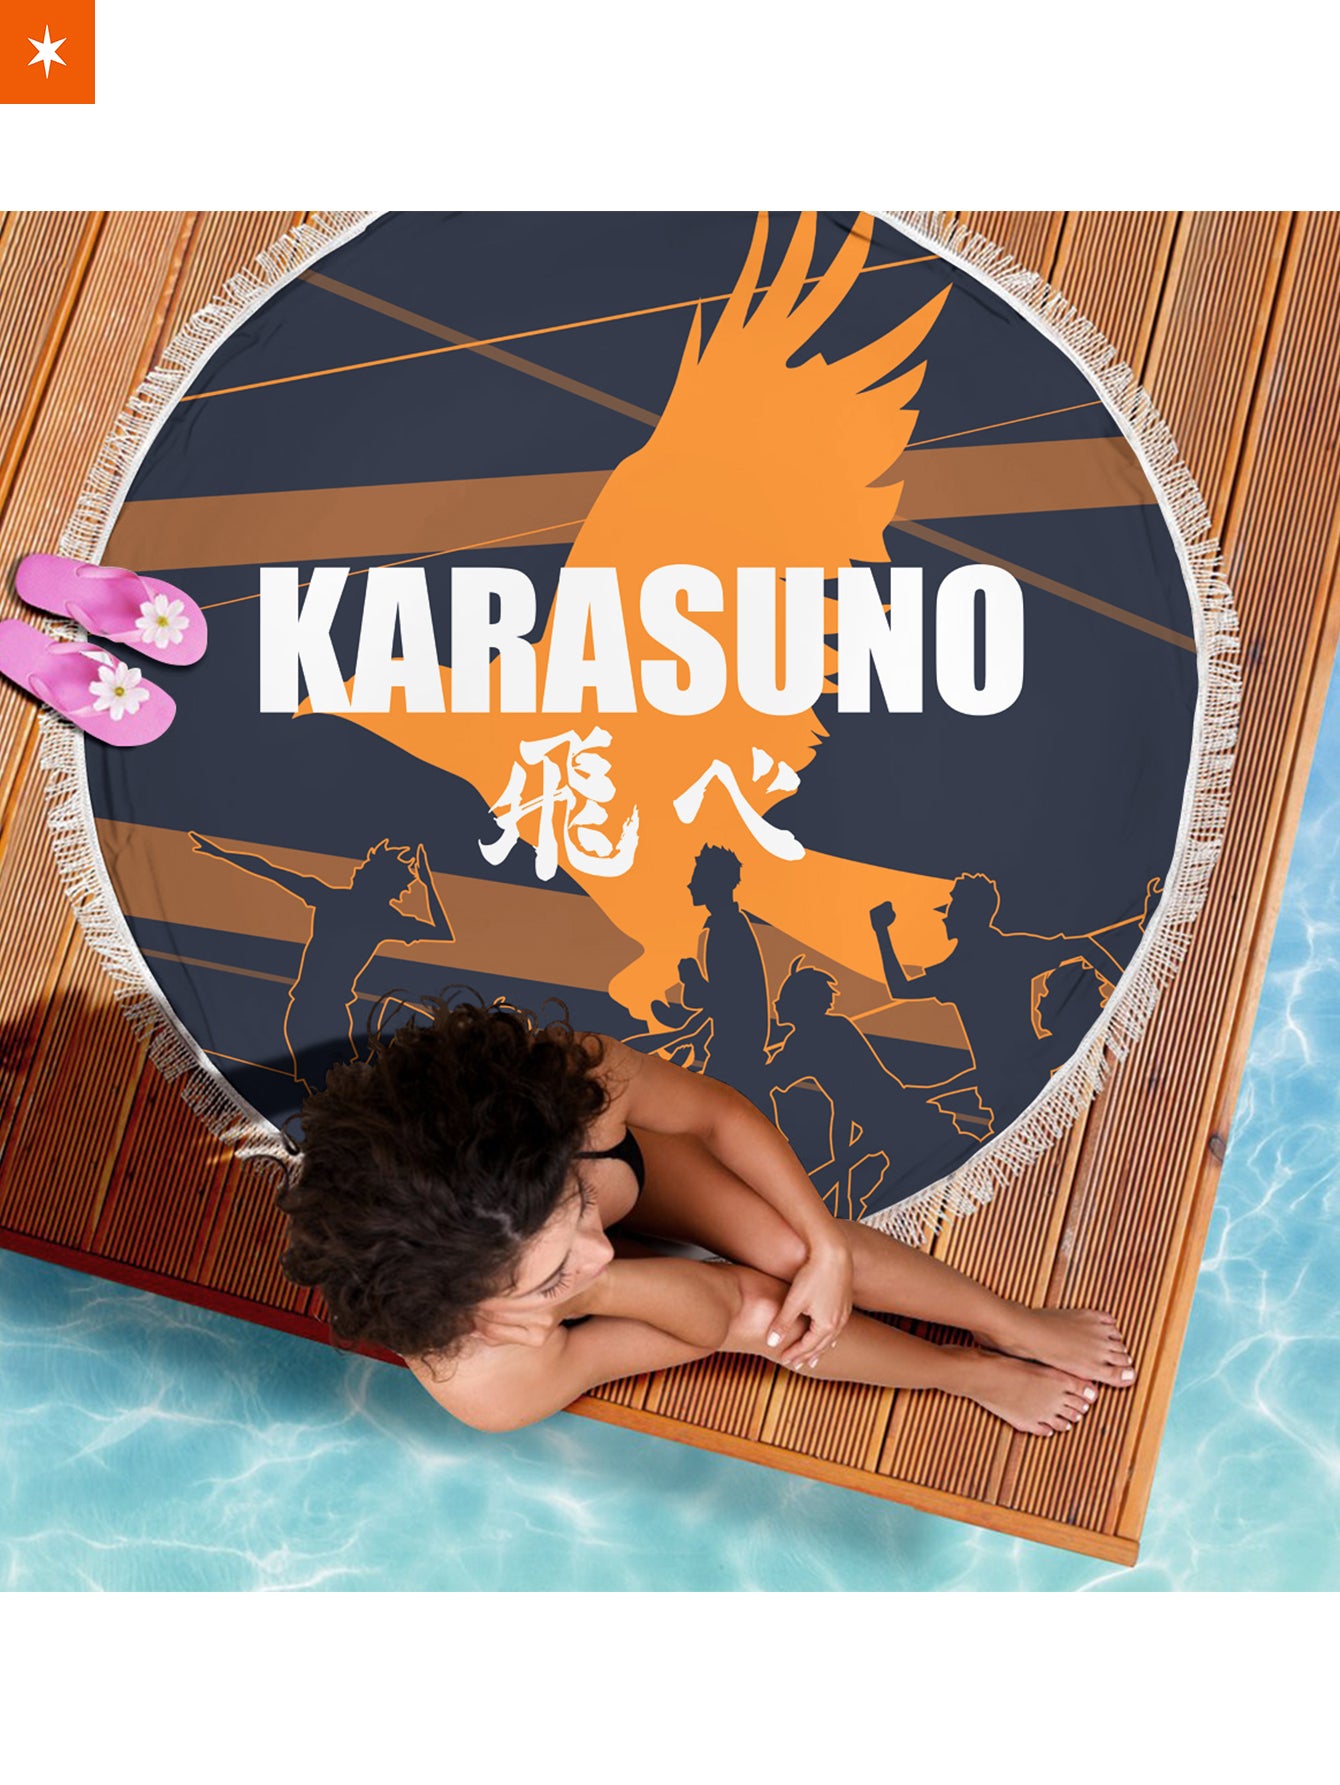 Fandomaniax - Karasuno Season Round Beach Towel